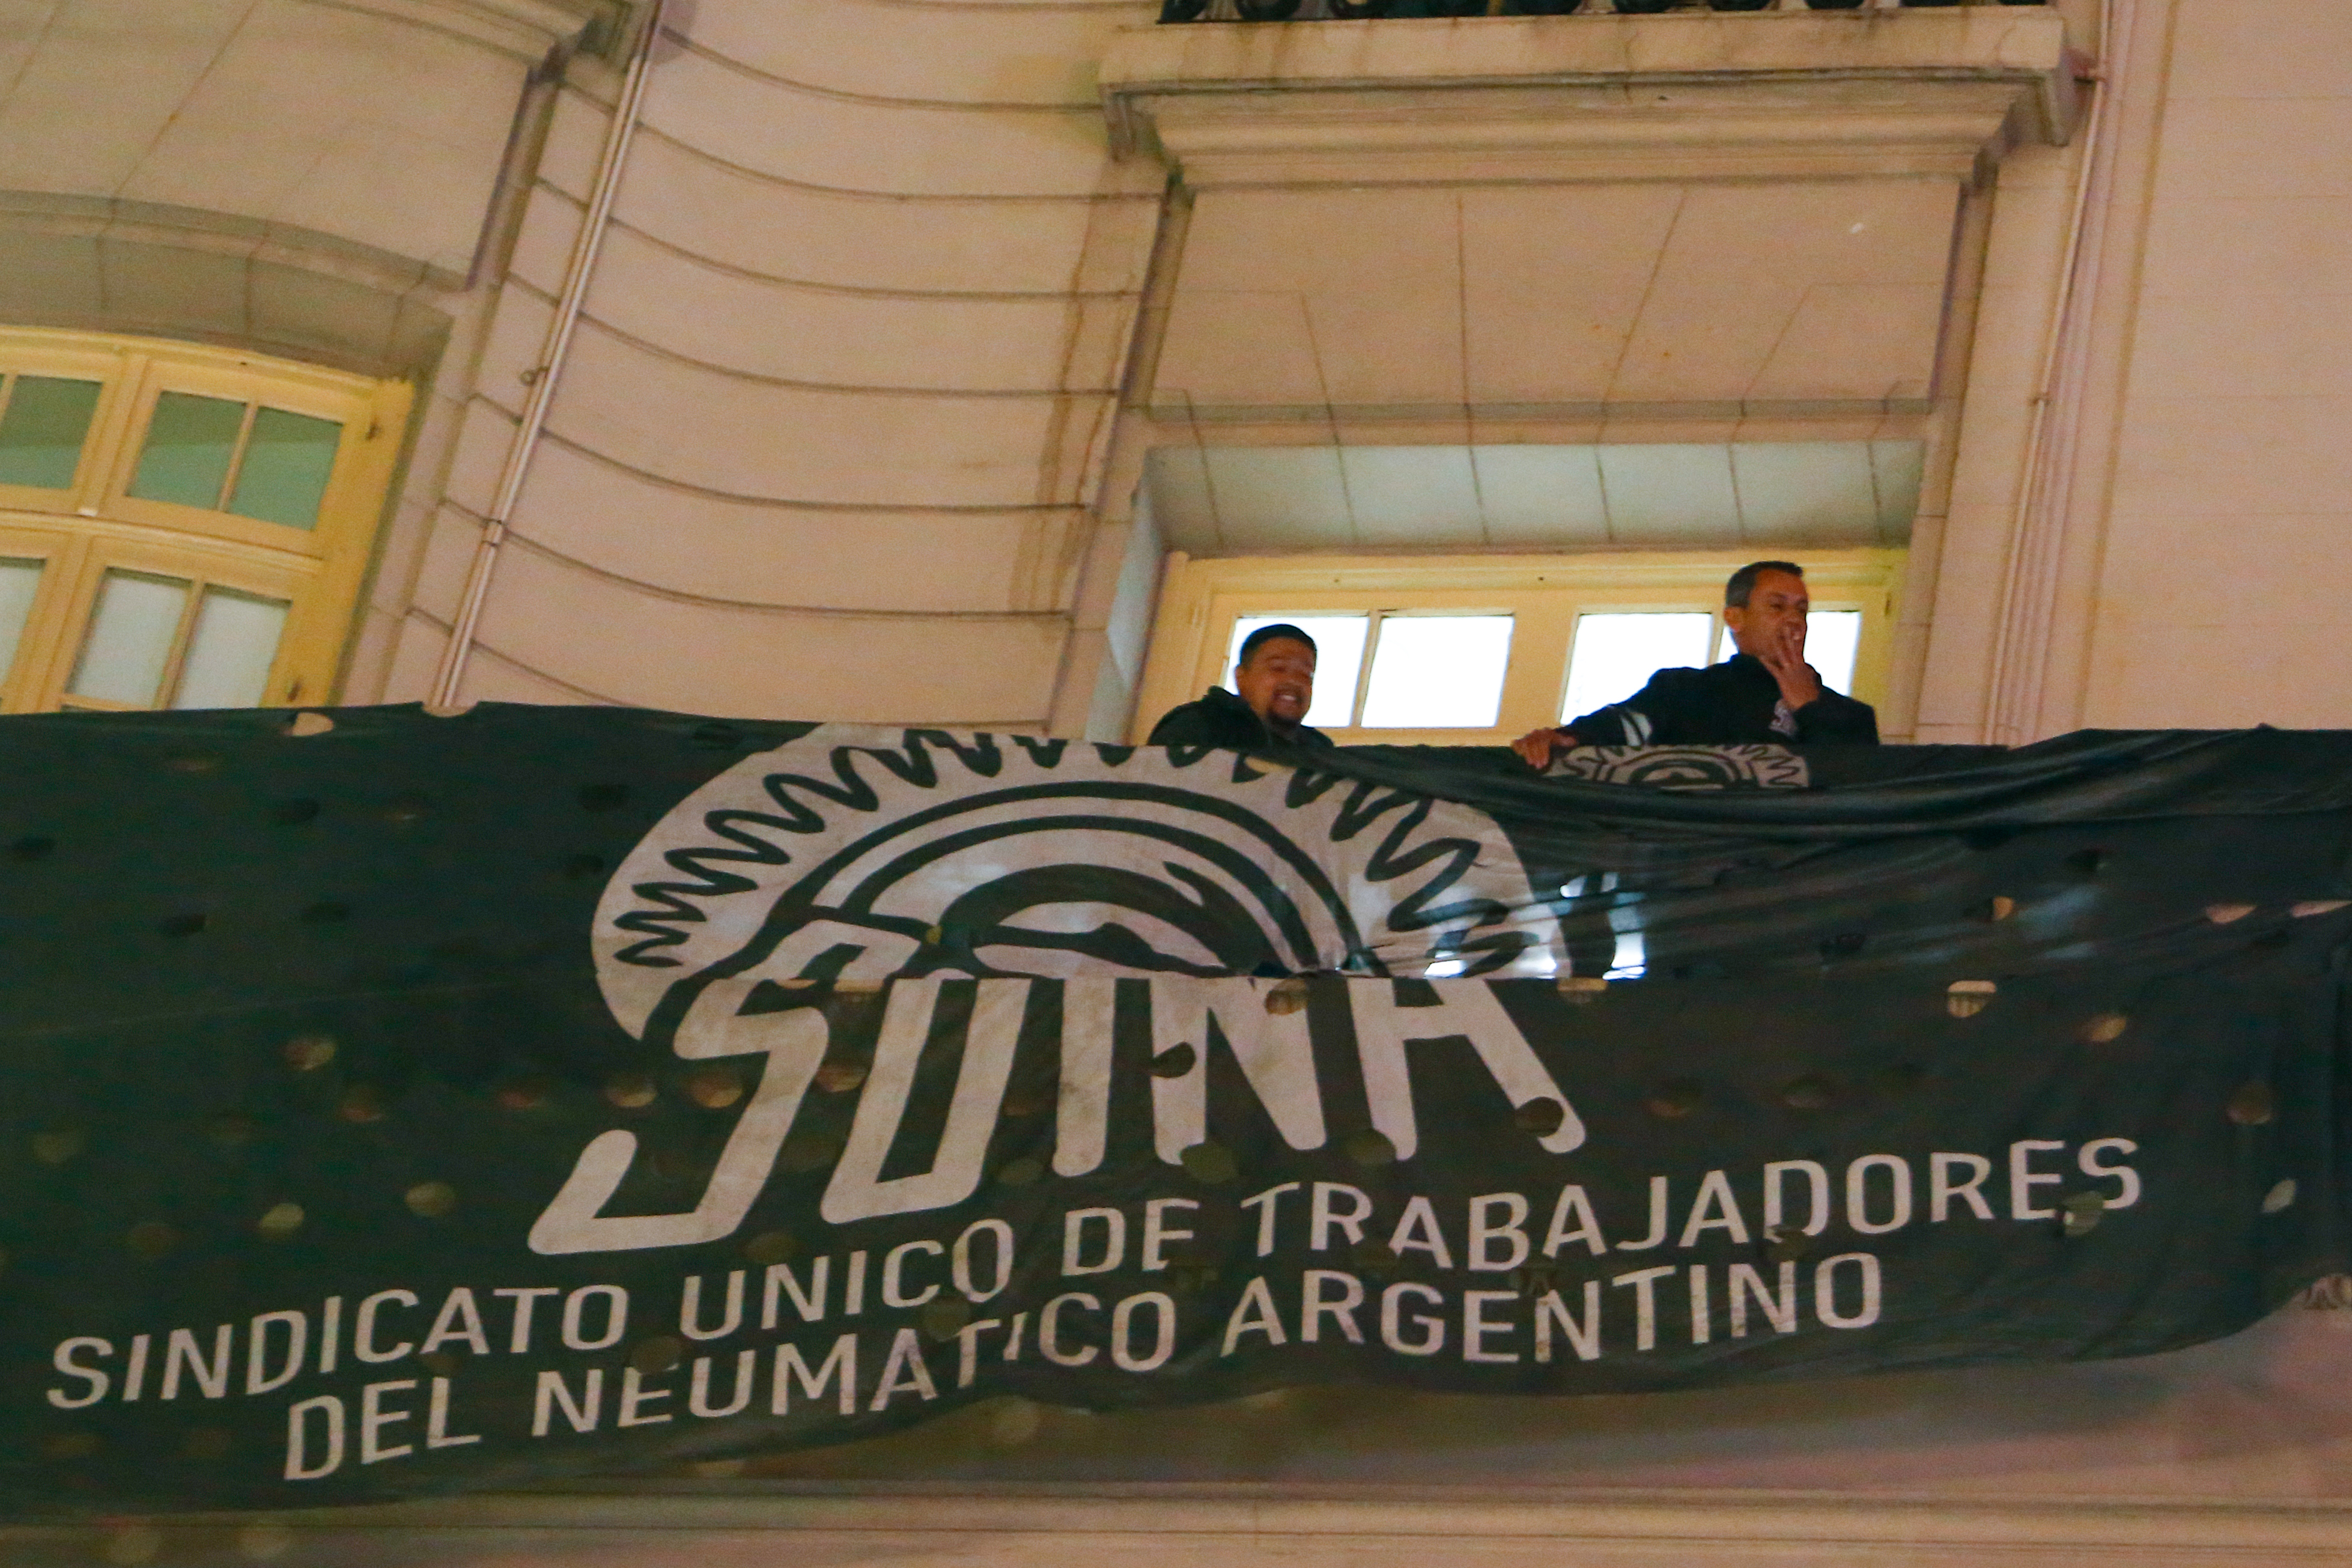 Union members on the balcony of Labor headquarters on Callao Street (Luciano Gonzalez)